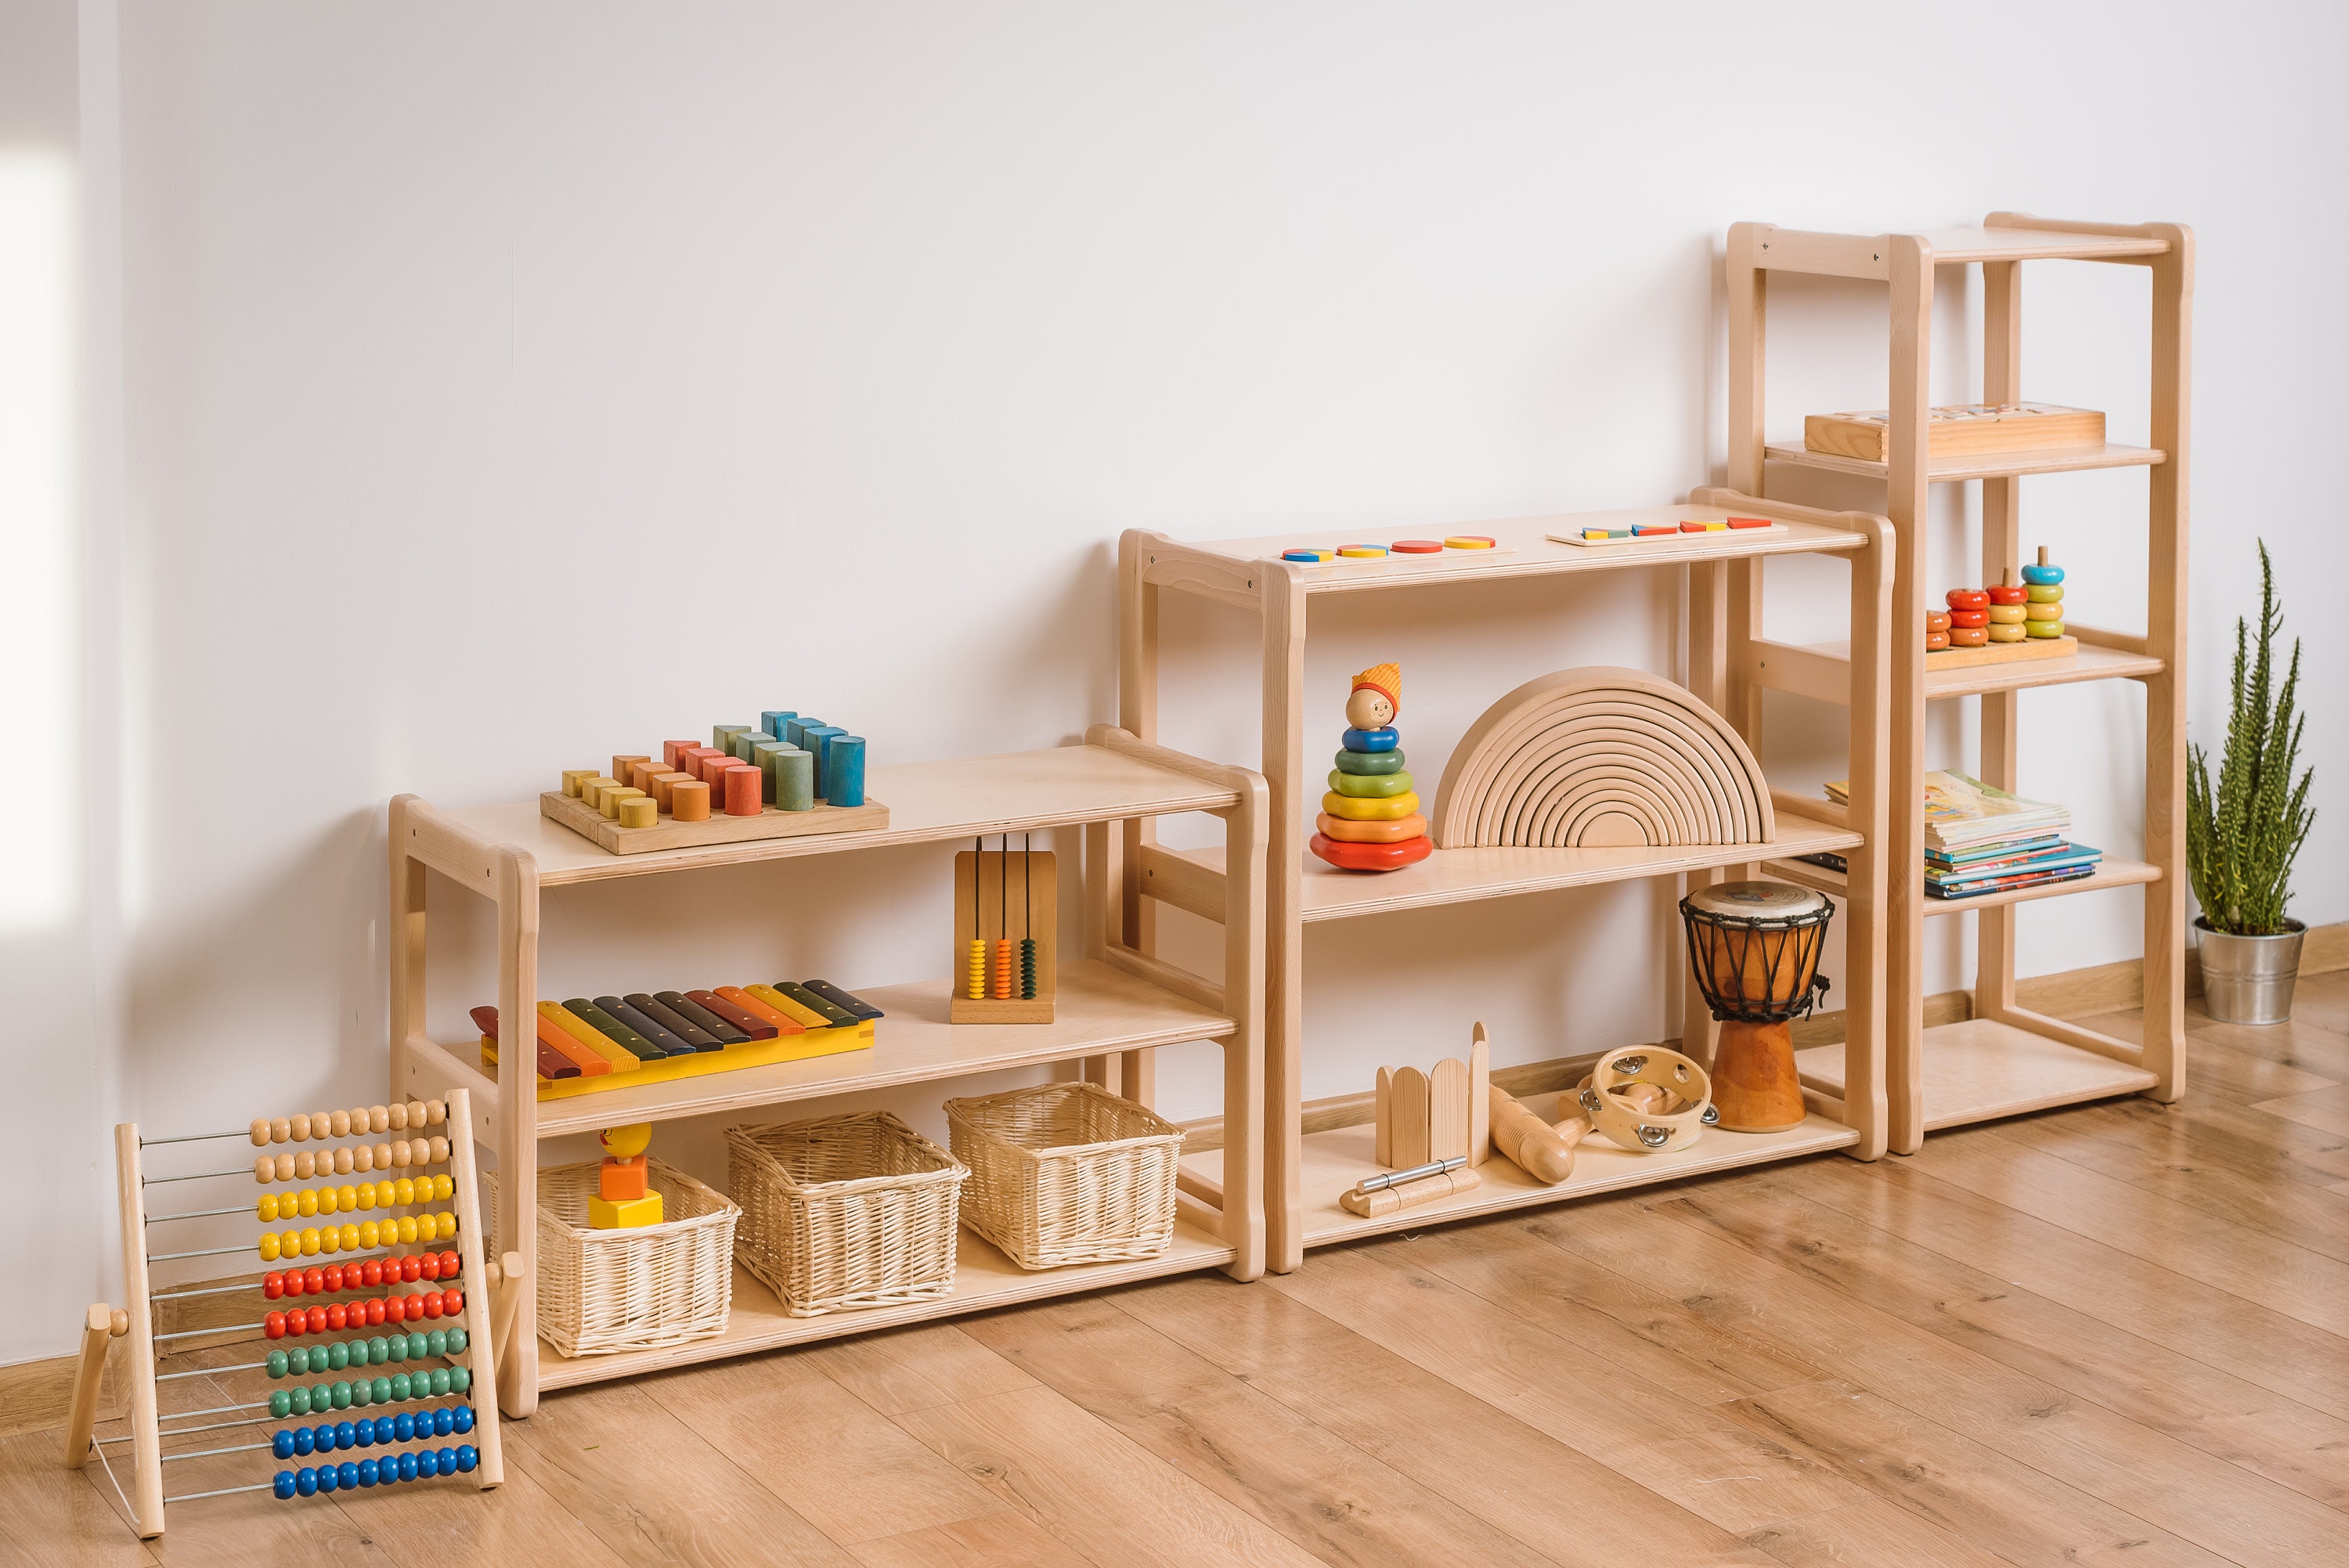 Montessori Educational Wooden Tray Toys For Children Montessori Furniture  Bookshelf Ractical Life Preschool Teaching Aids A1466F